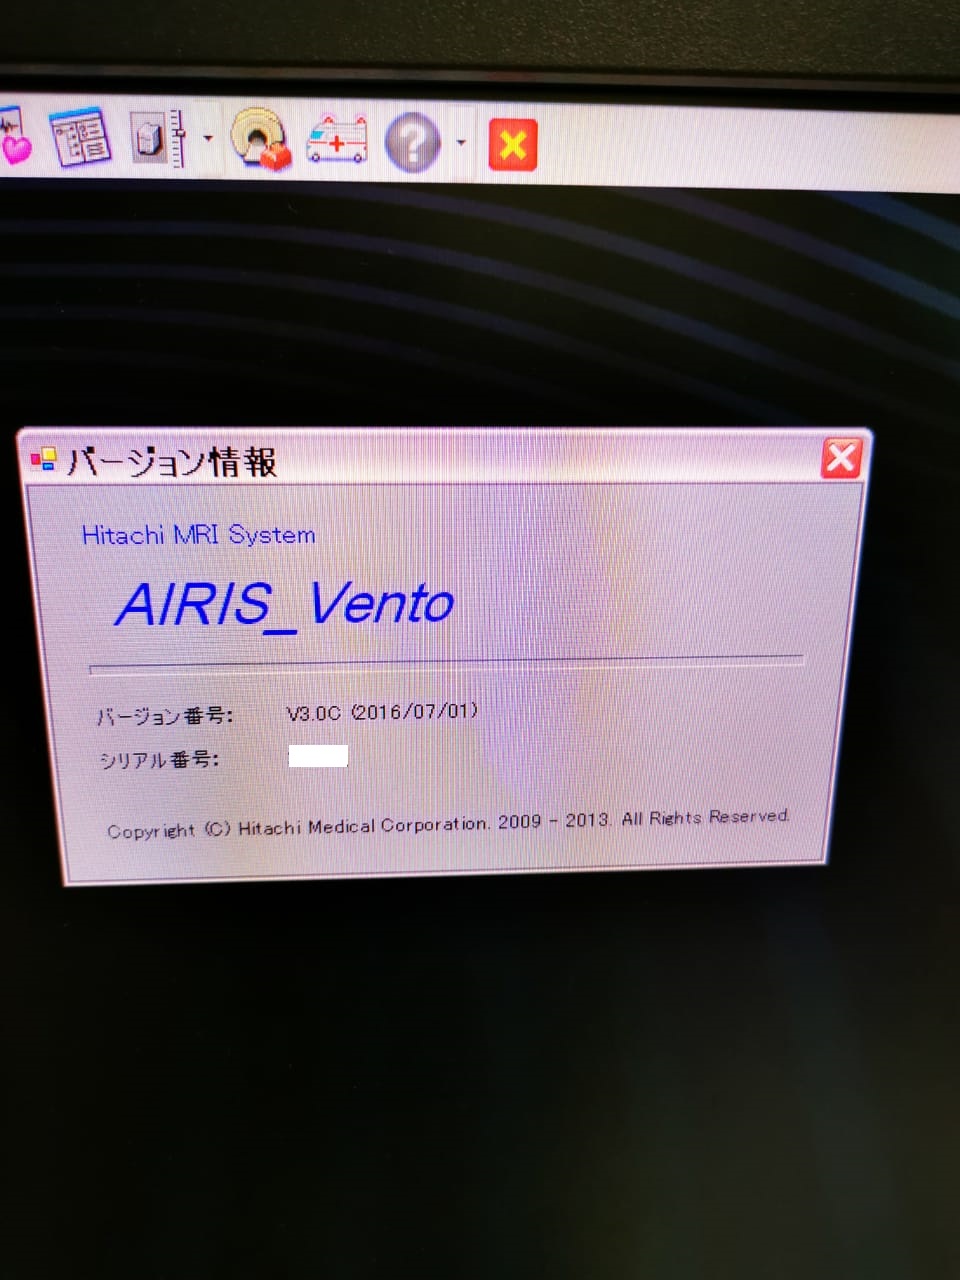 Preowned Hitachi Medical Systems AIRIS Vento MRI Machine